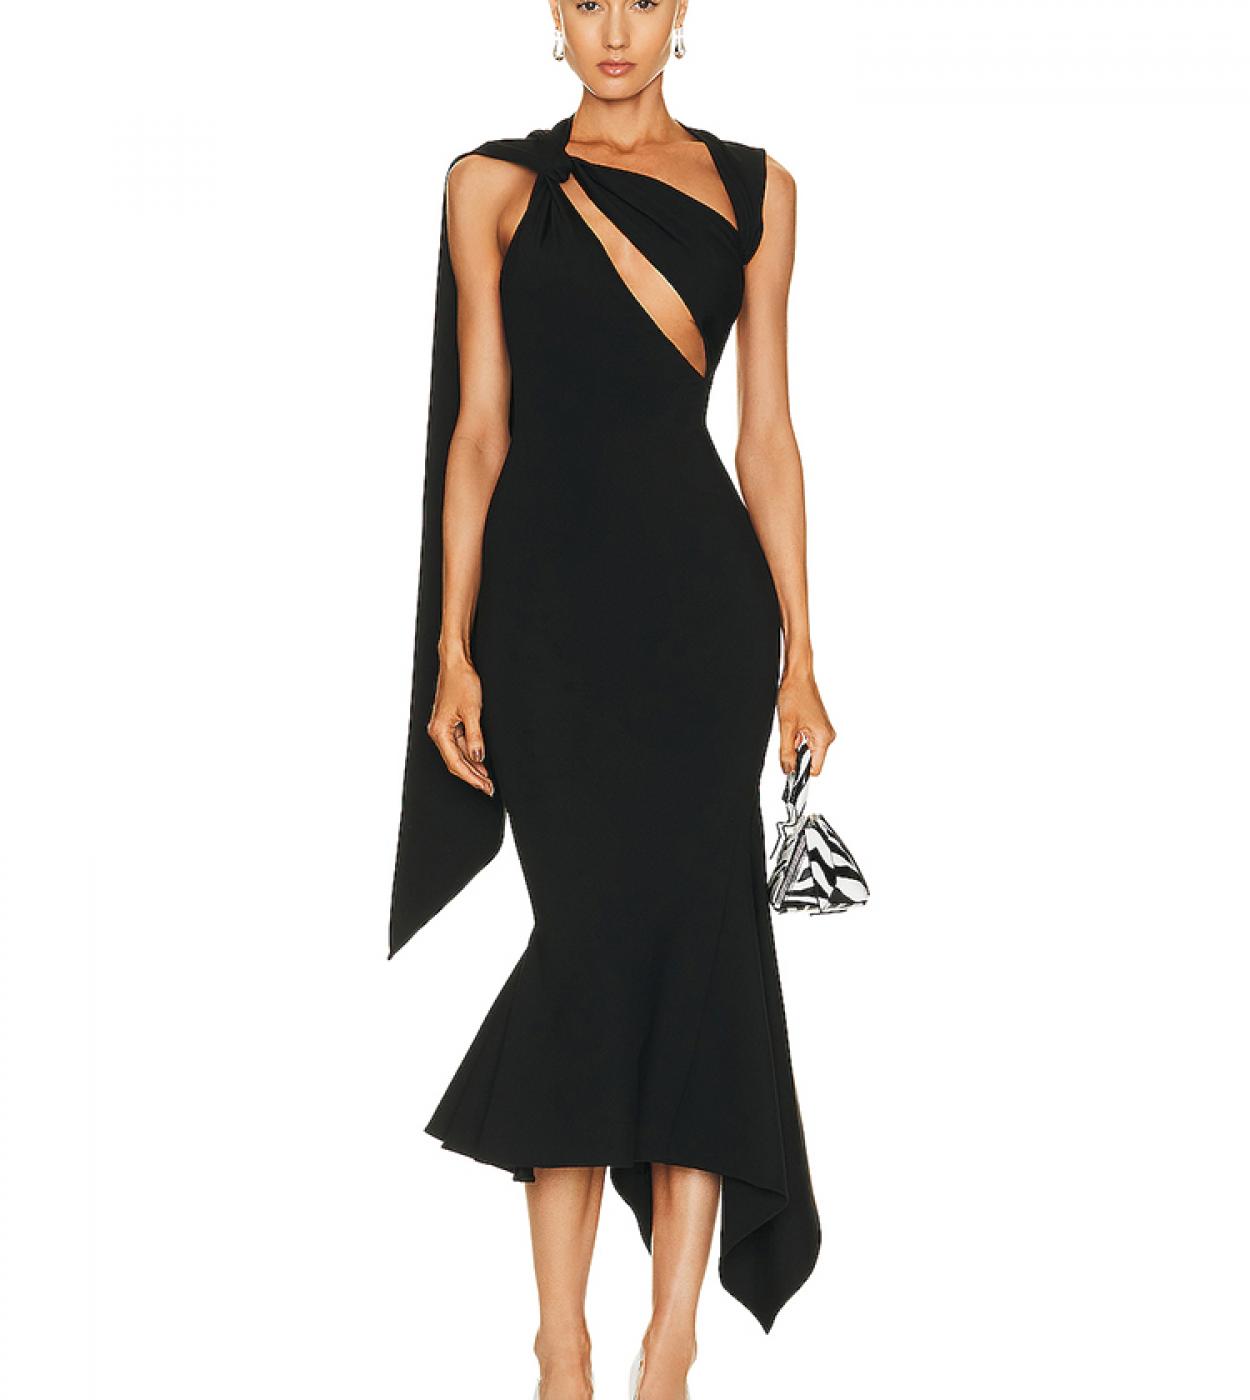  Diagonal Collar Cutout Design Long Dress Women Black Sleeveless Backless Irregular Slim Dress Elegant Evening Club Part